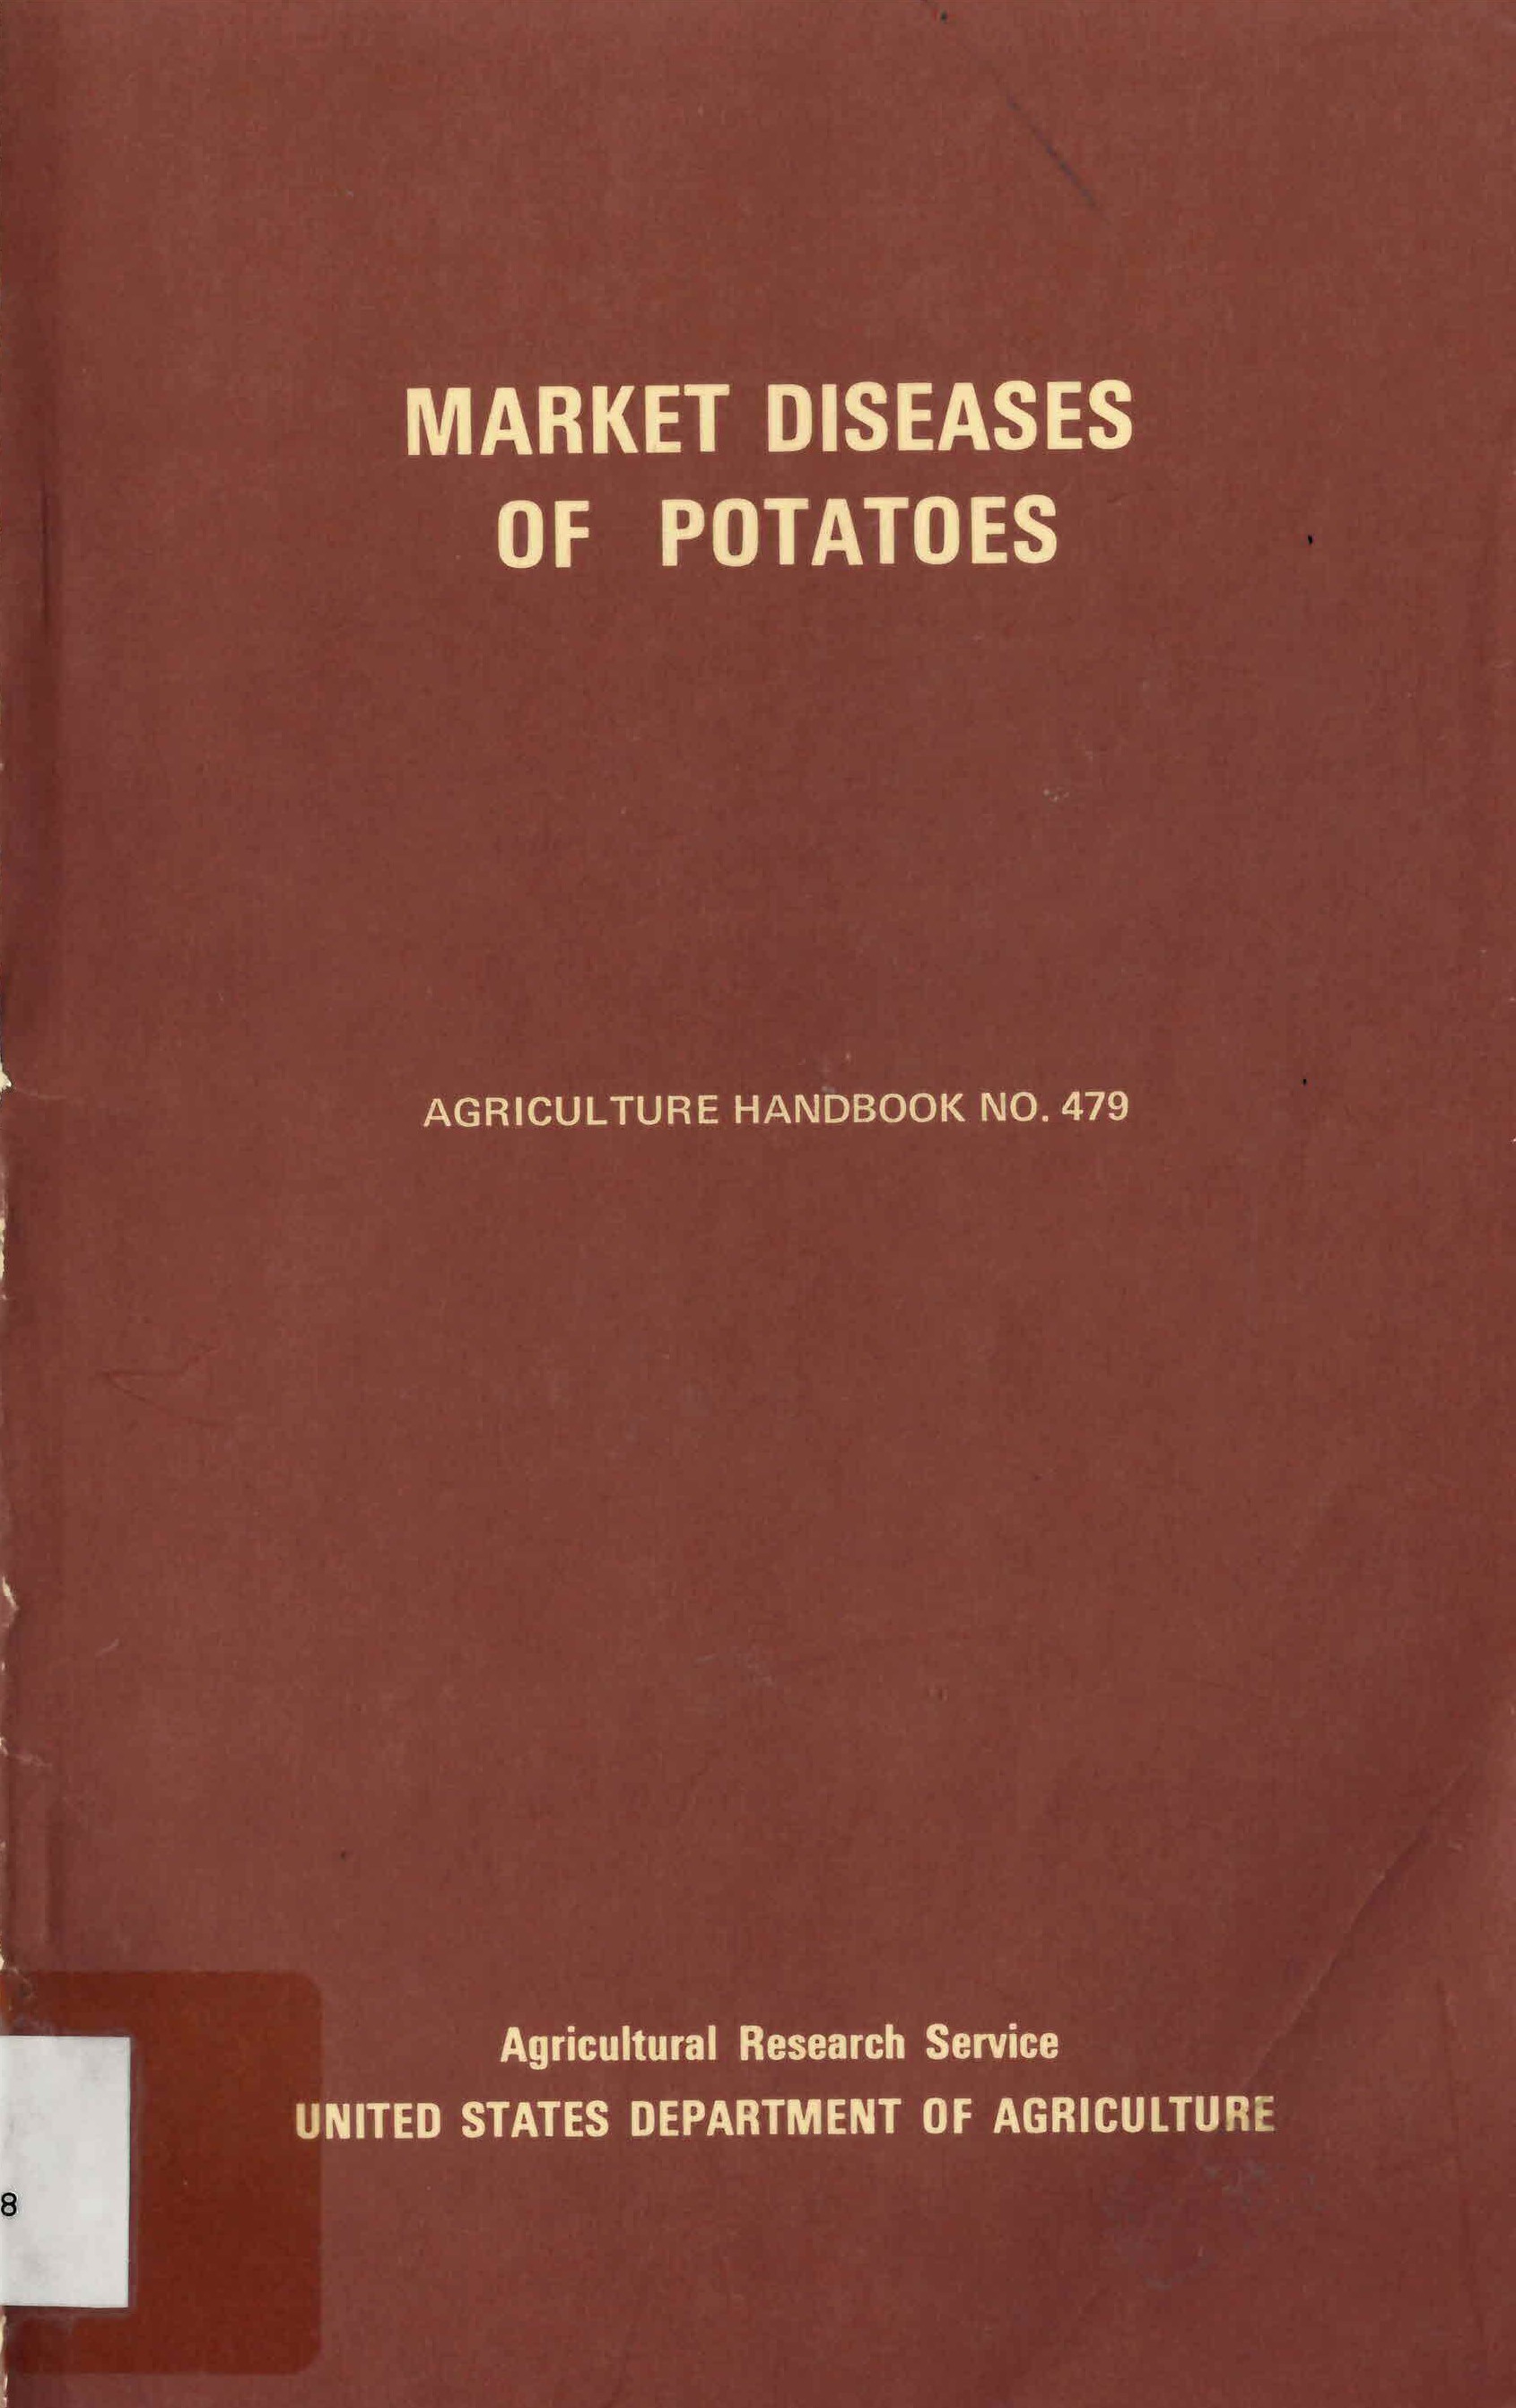 Market diseases of potatoes.